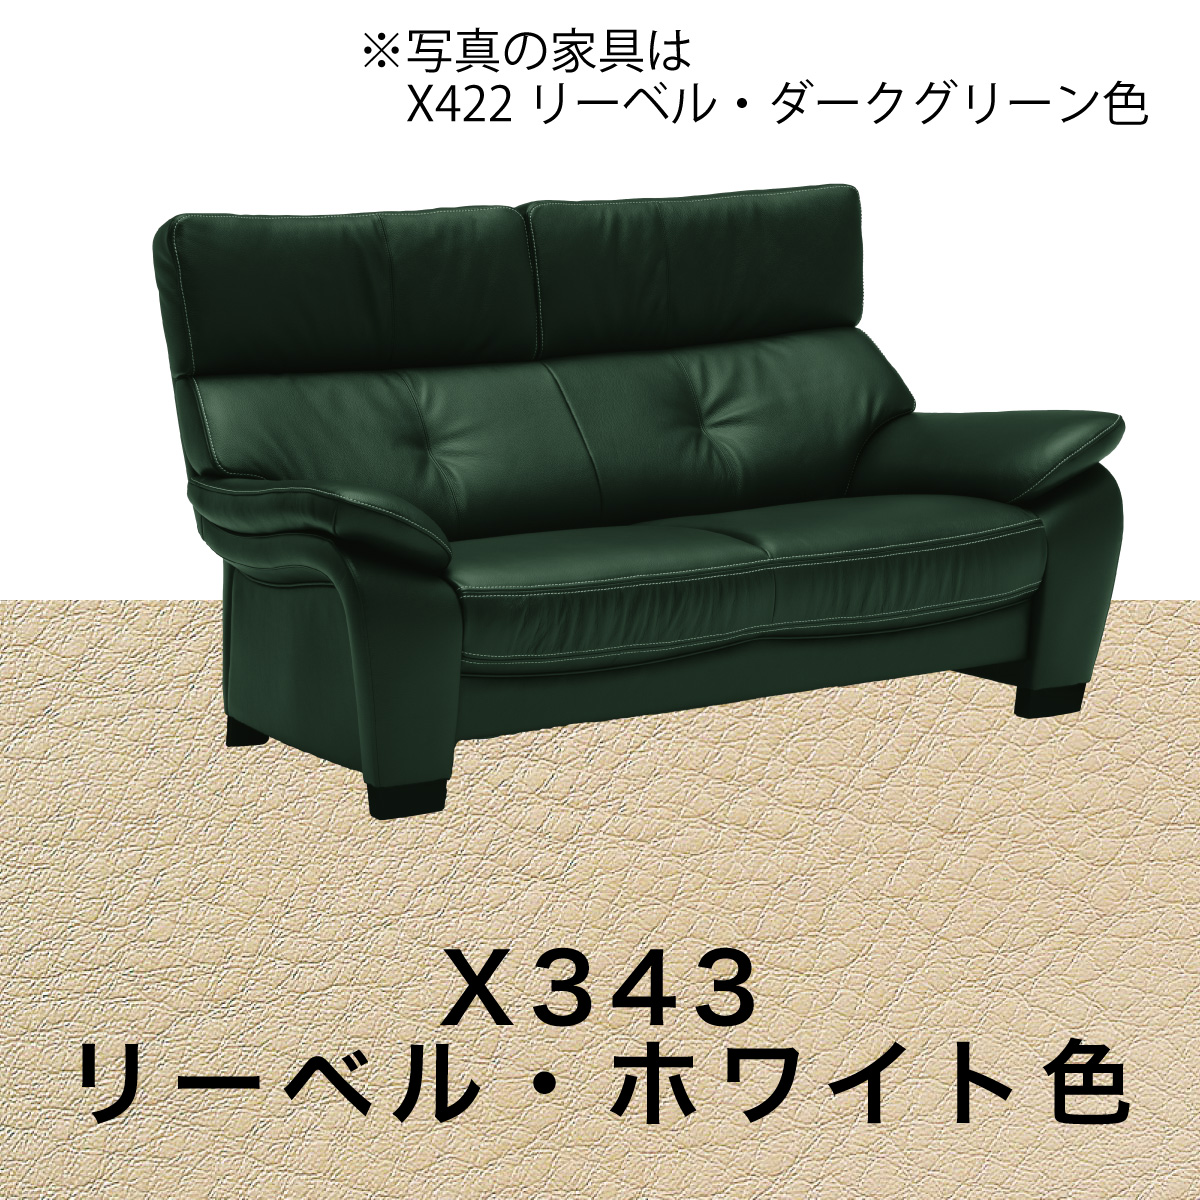 Karimoku 高級 ソファー 二人掛け レザー 本革 カリモク 家具 椅子 